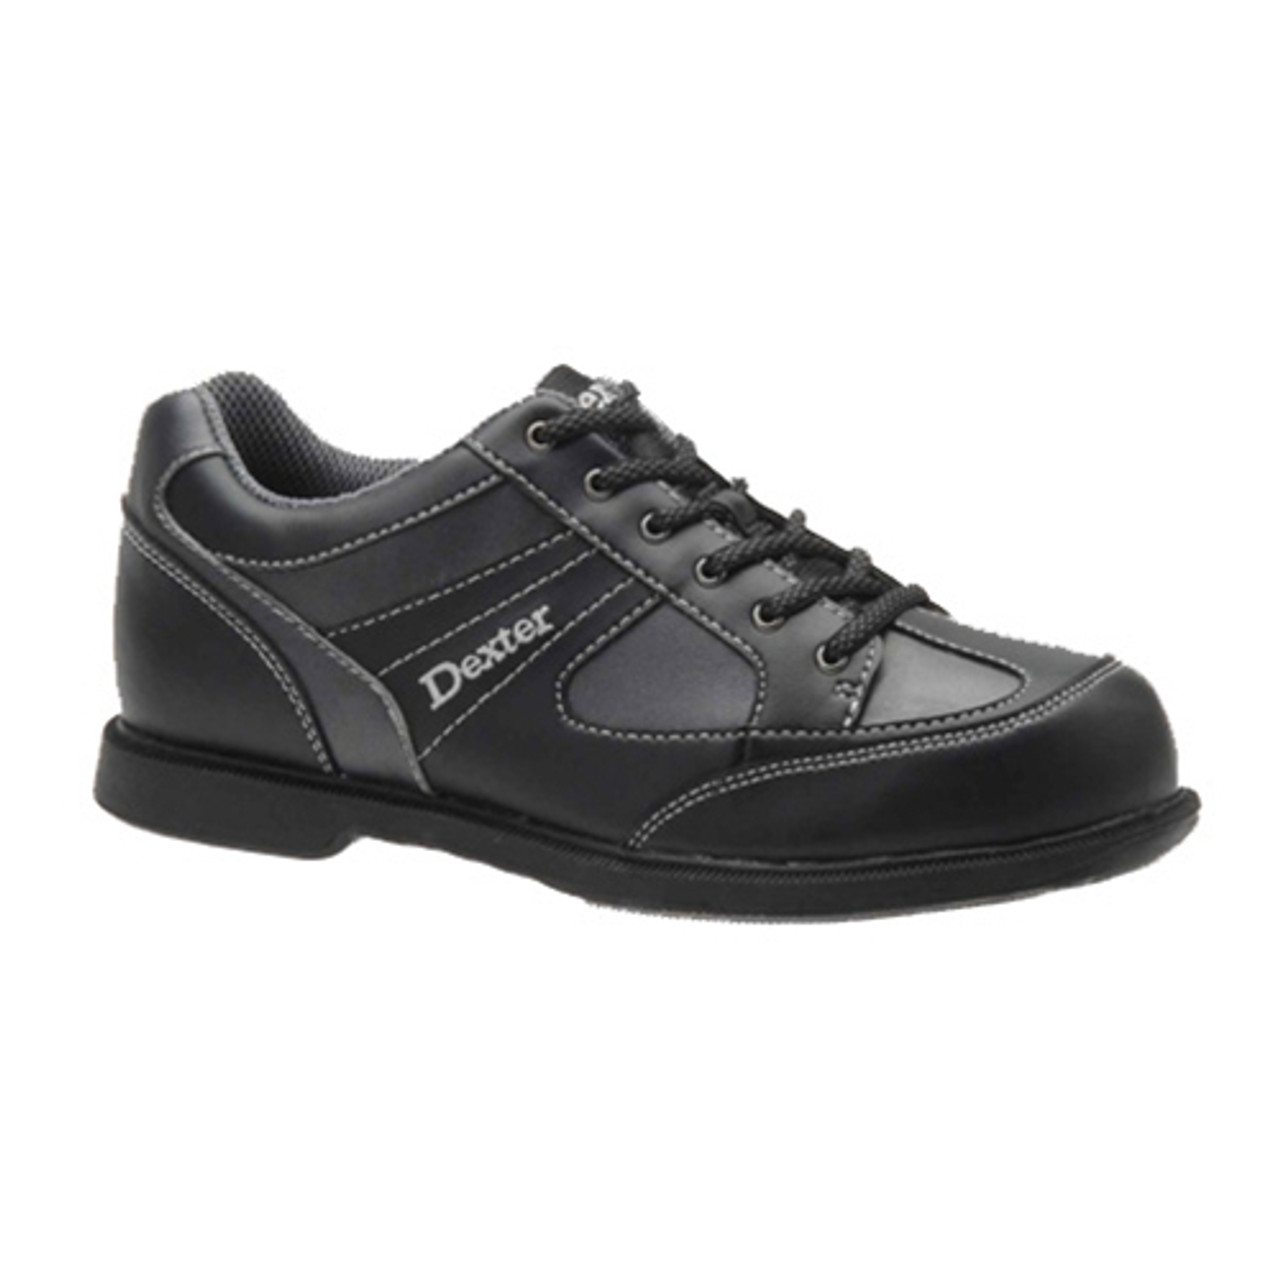 Mens Dexter PRO AM II Bowling Shoes Black/Alloy Sizes 7-15 Left Handed 